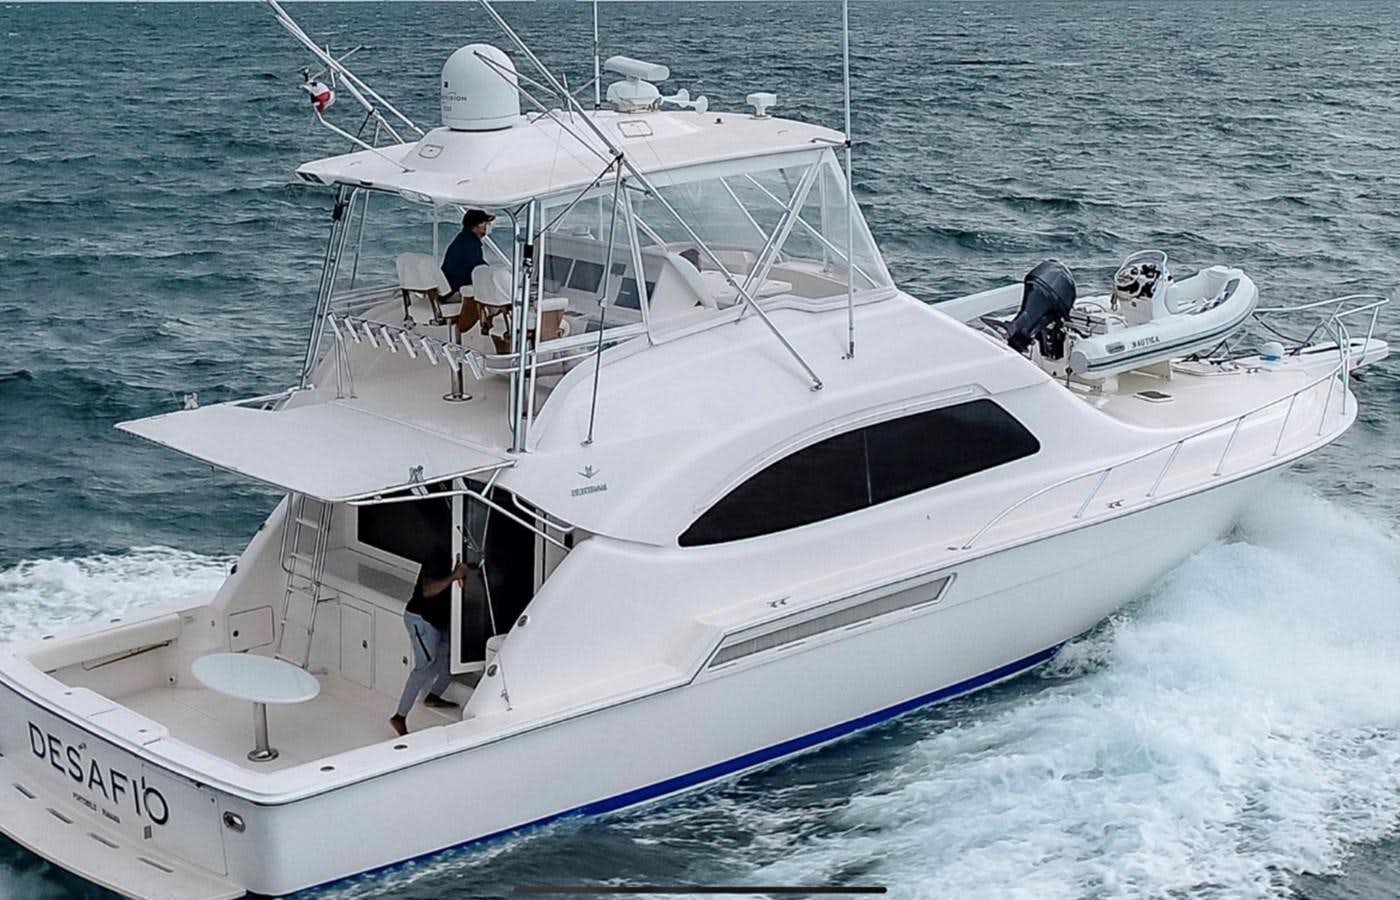 Desafio
Yacht for Sale